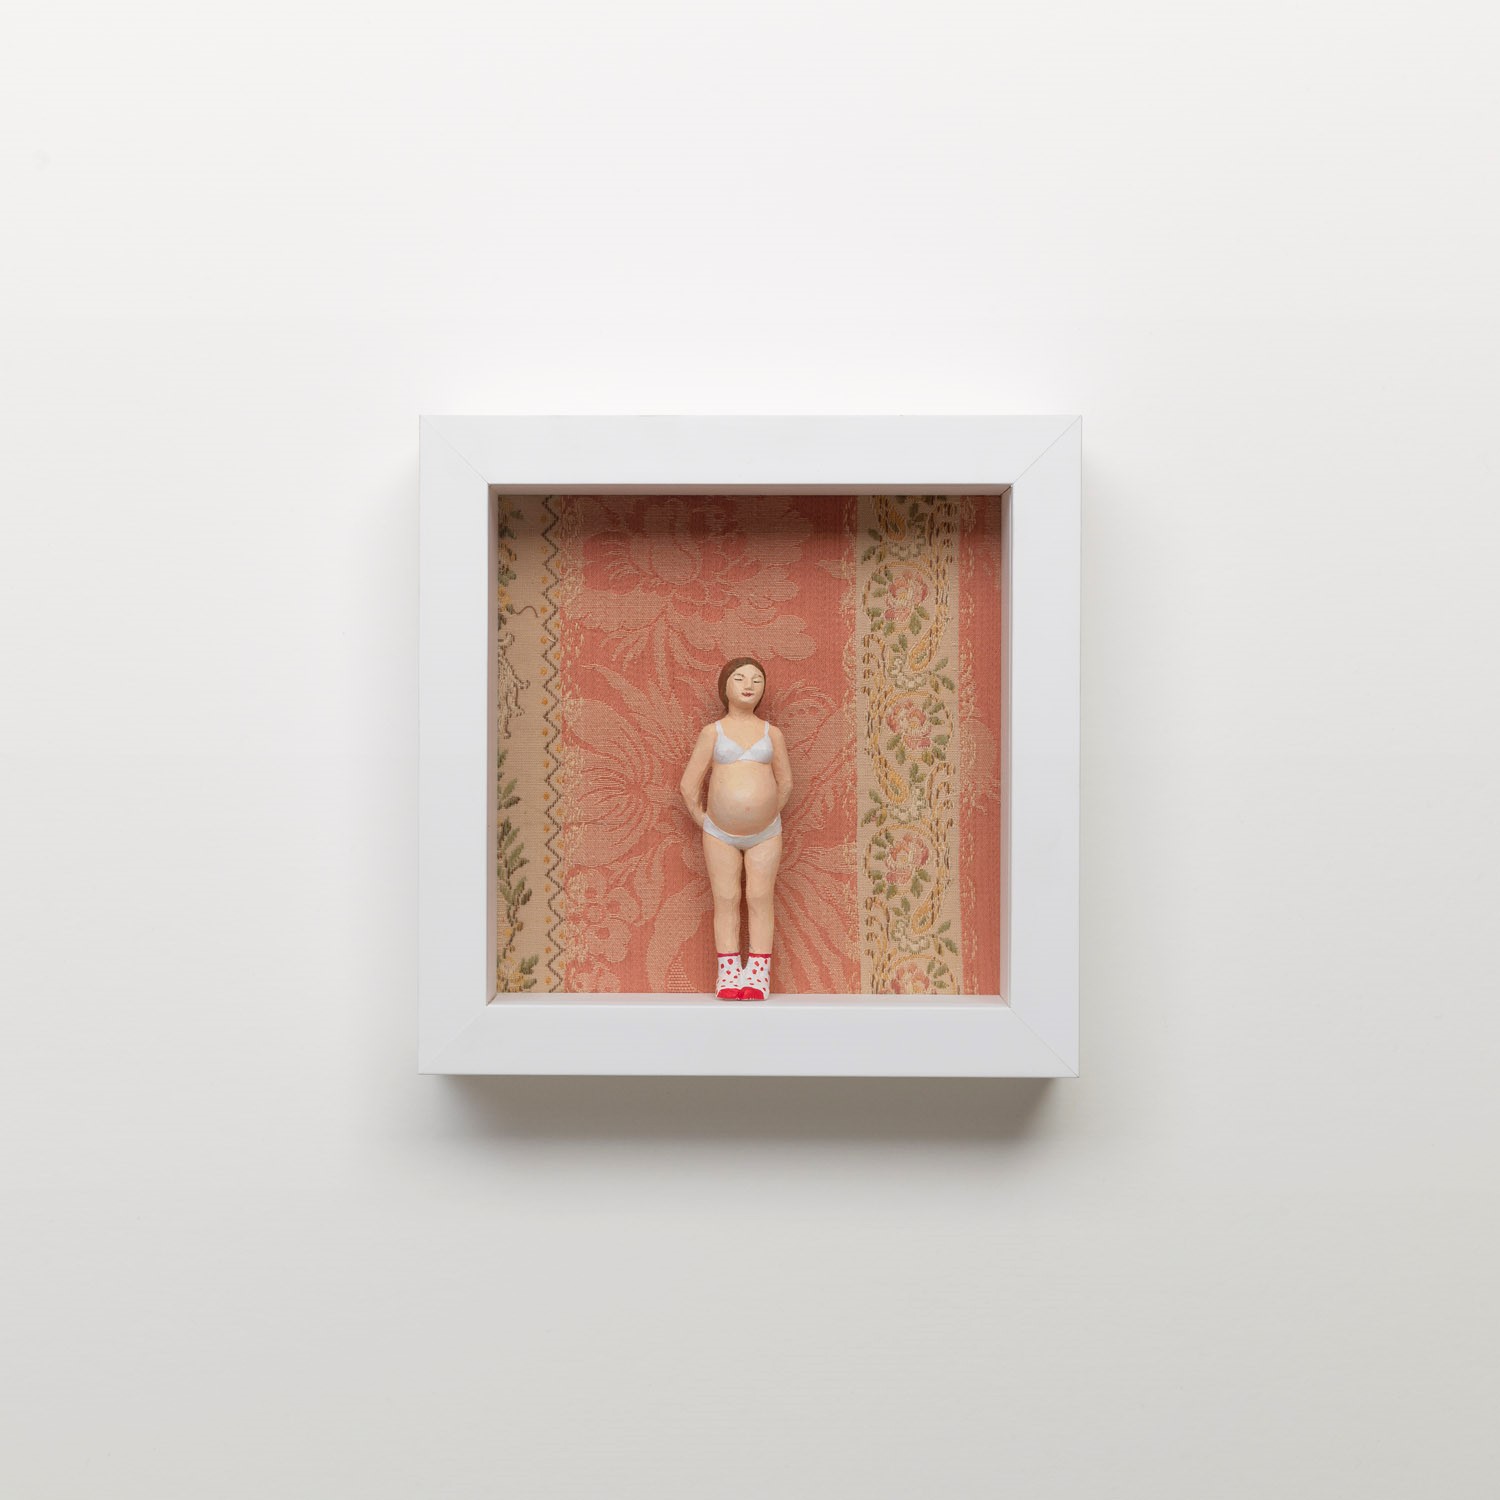 Katarina Toman Kracina, Midve, mešana tehnika, 22x22x5 cm, stenski objekt, 2018